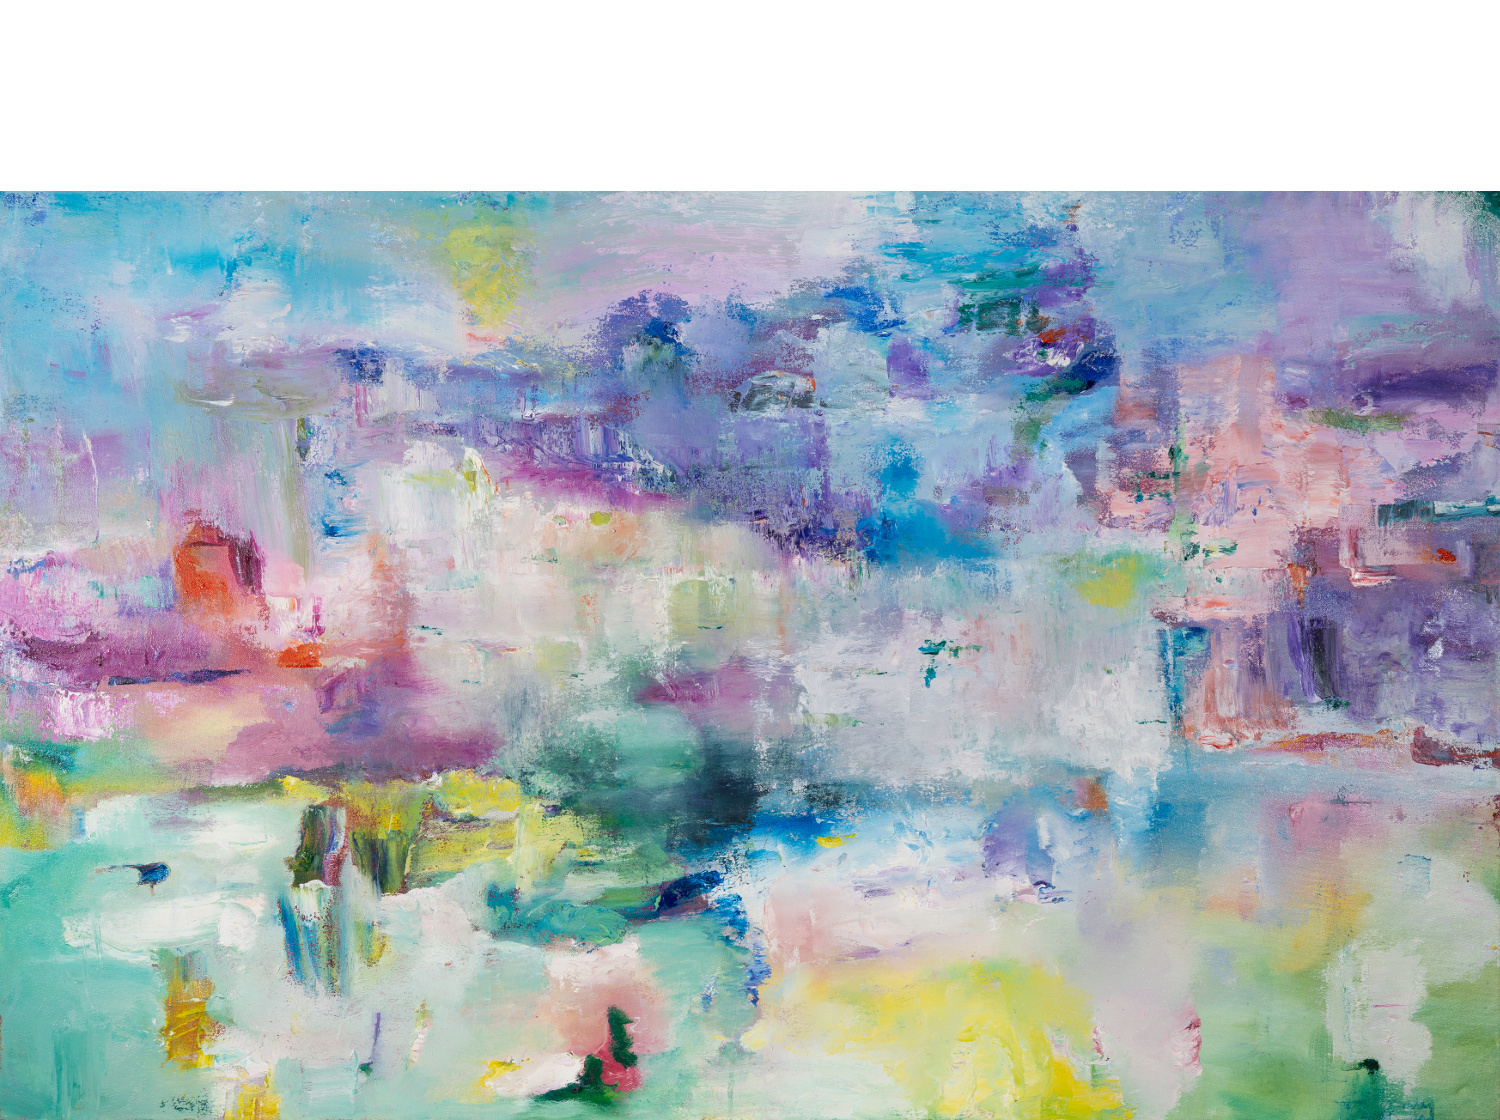 Ruth Feldman, Painting — Leaping Clear